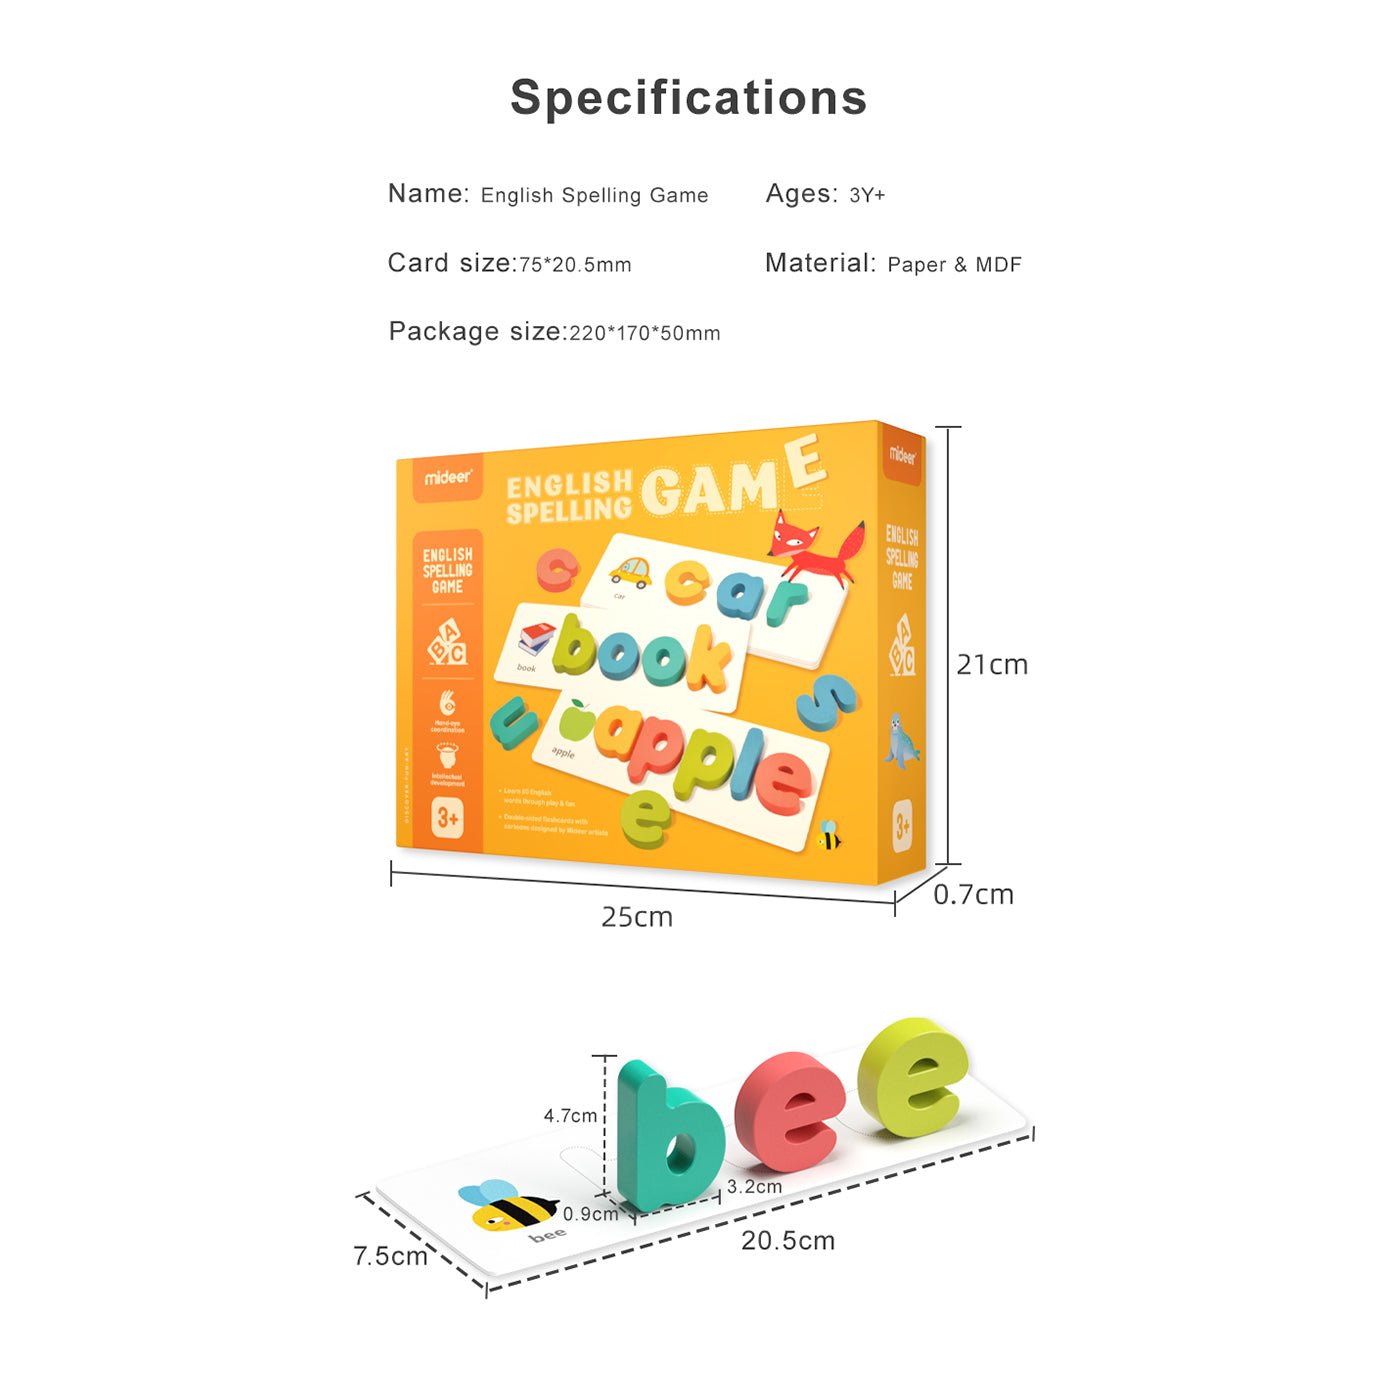 English Spelling Game - 0cm